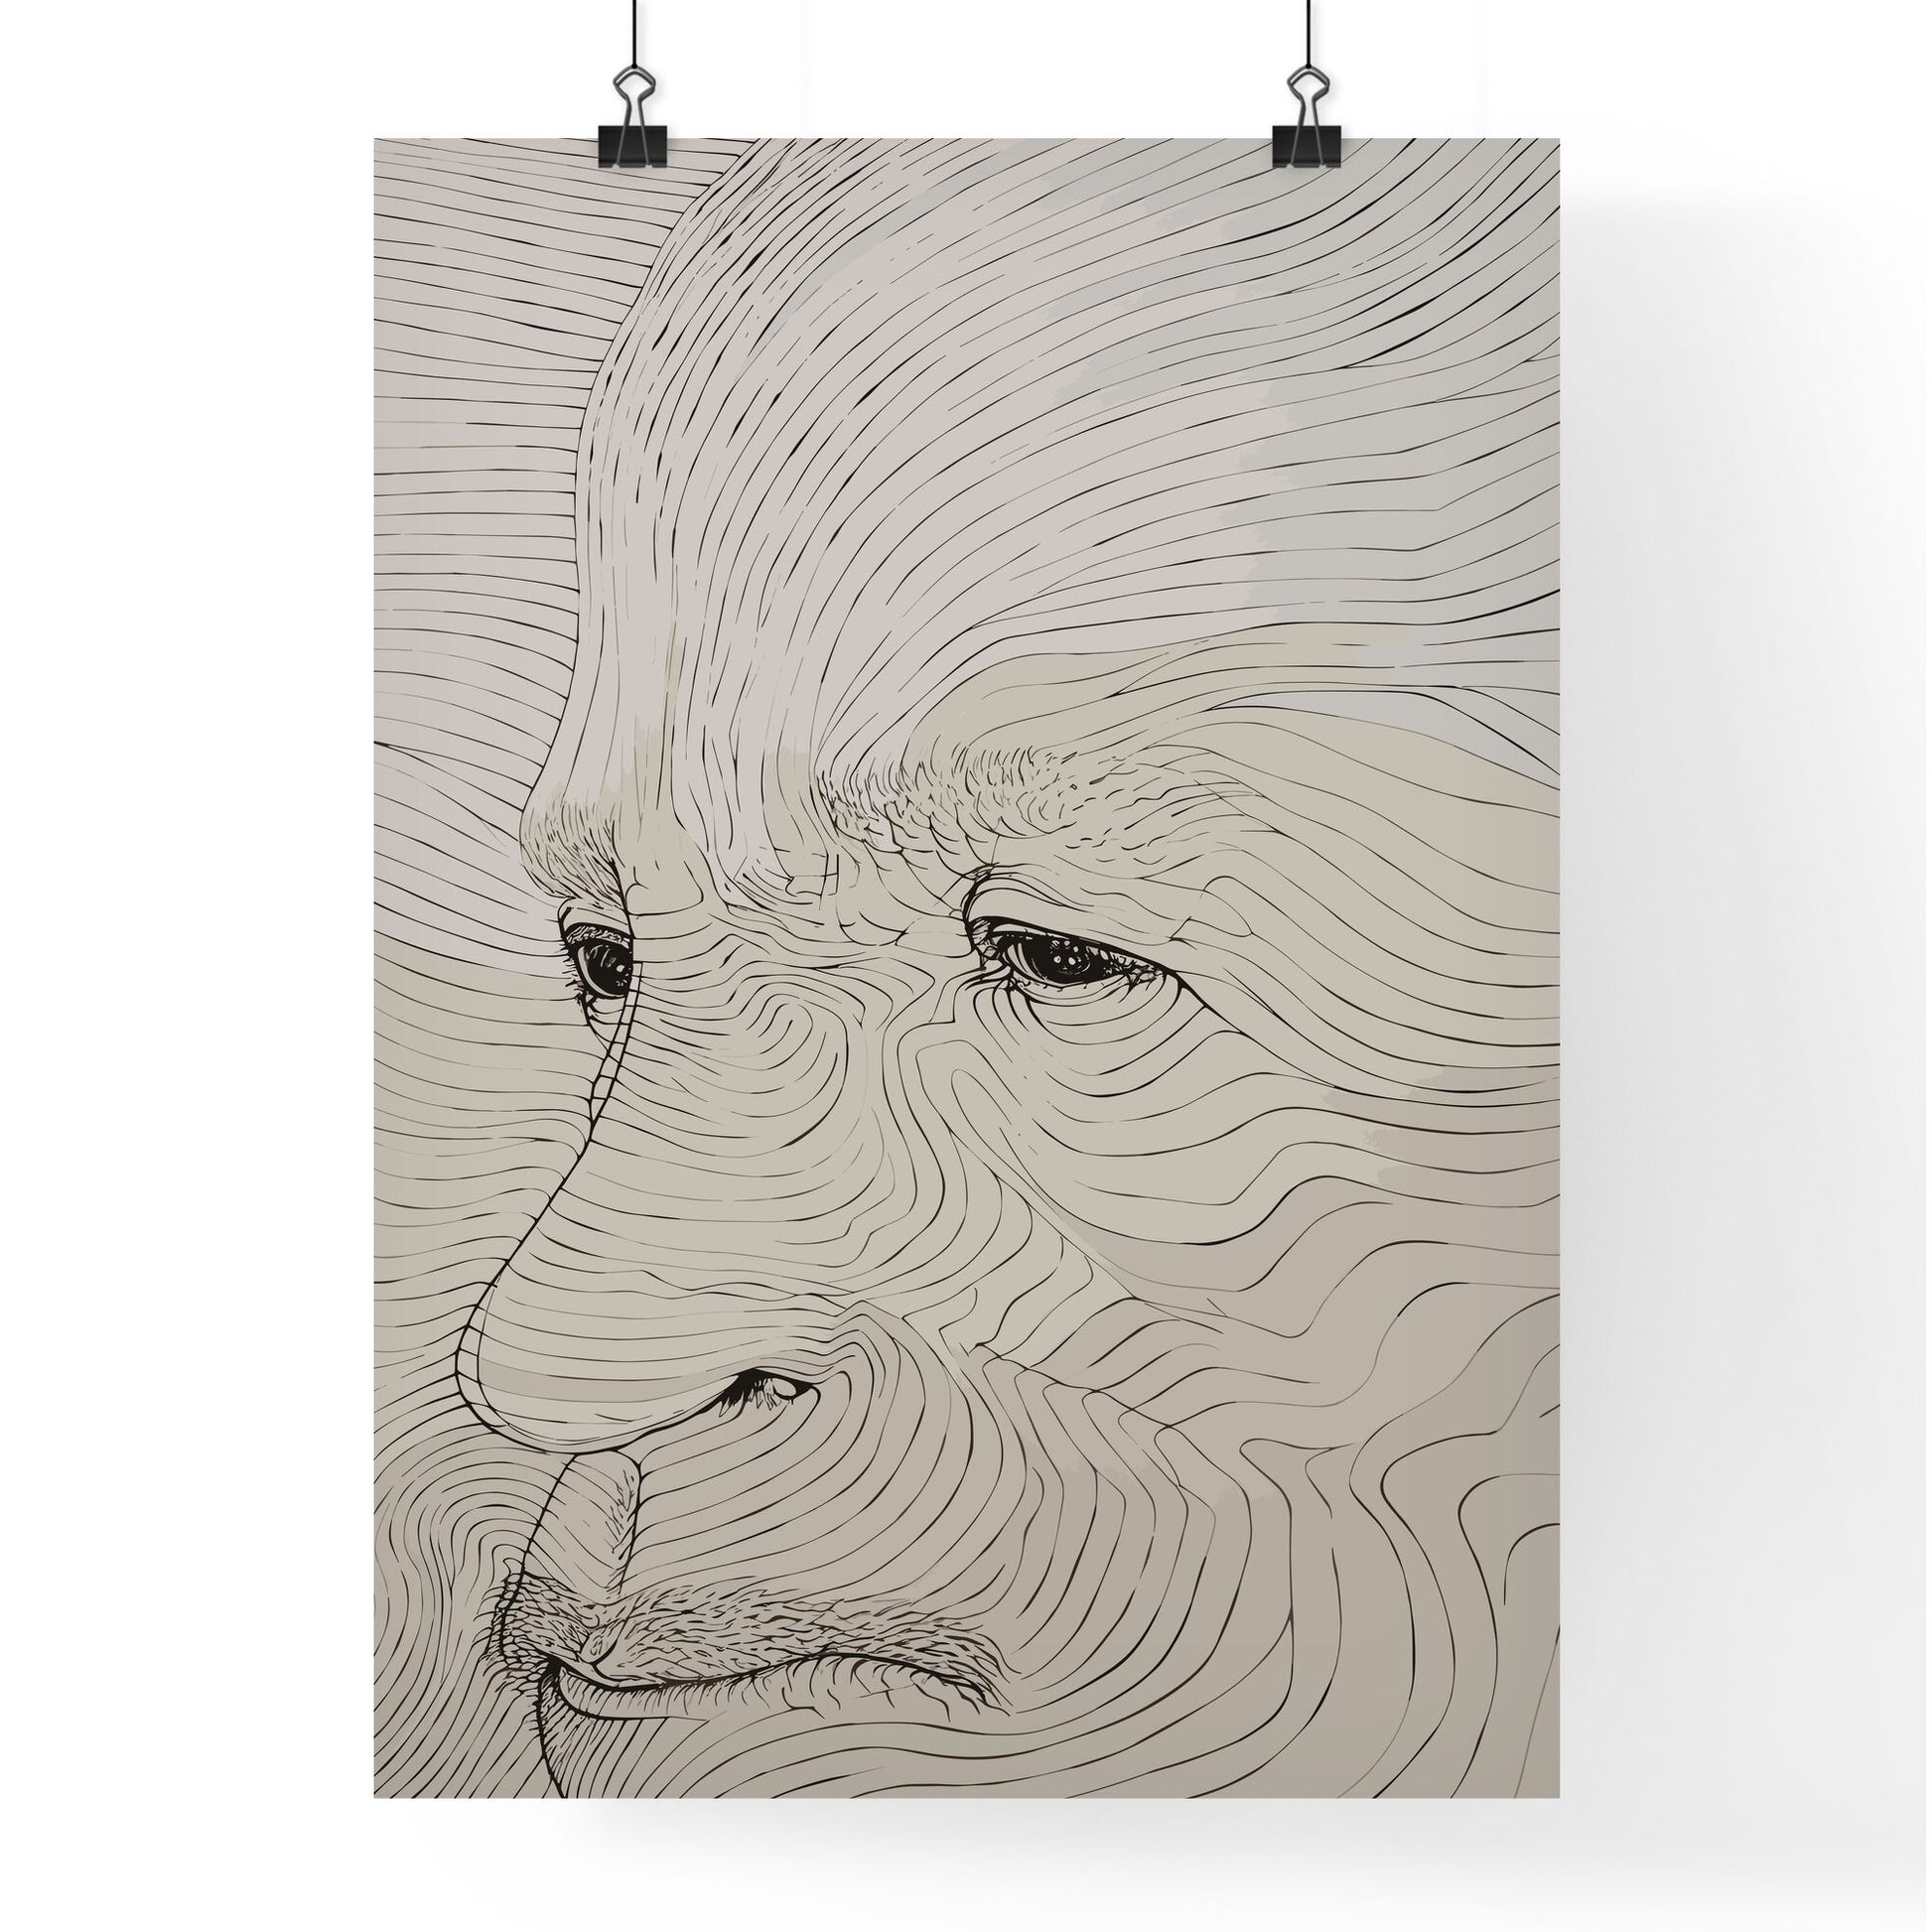 Portrait Of Albert Einstein - A Drawing Of A Man_S Face by HEBSTREIT